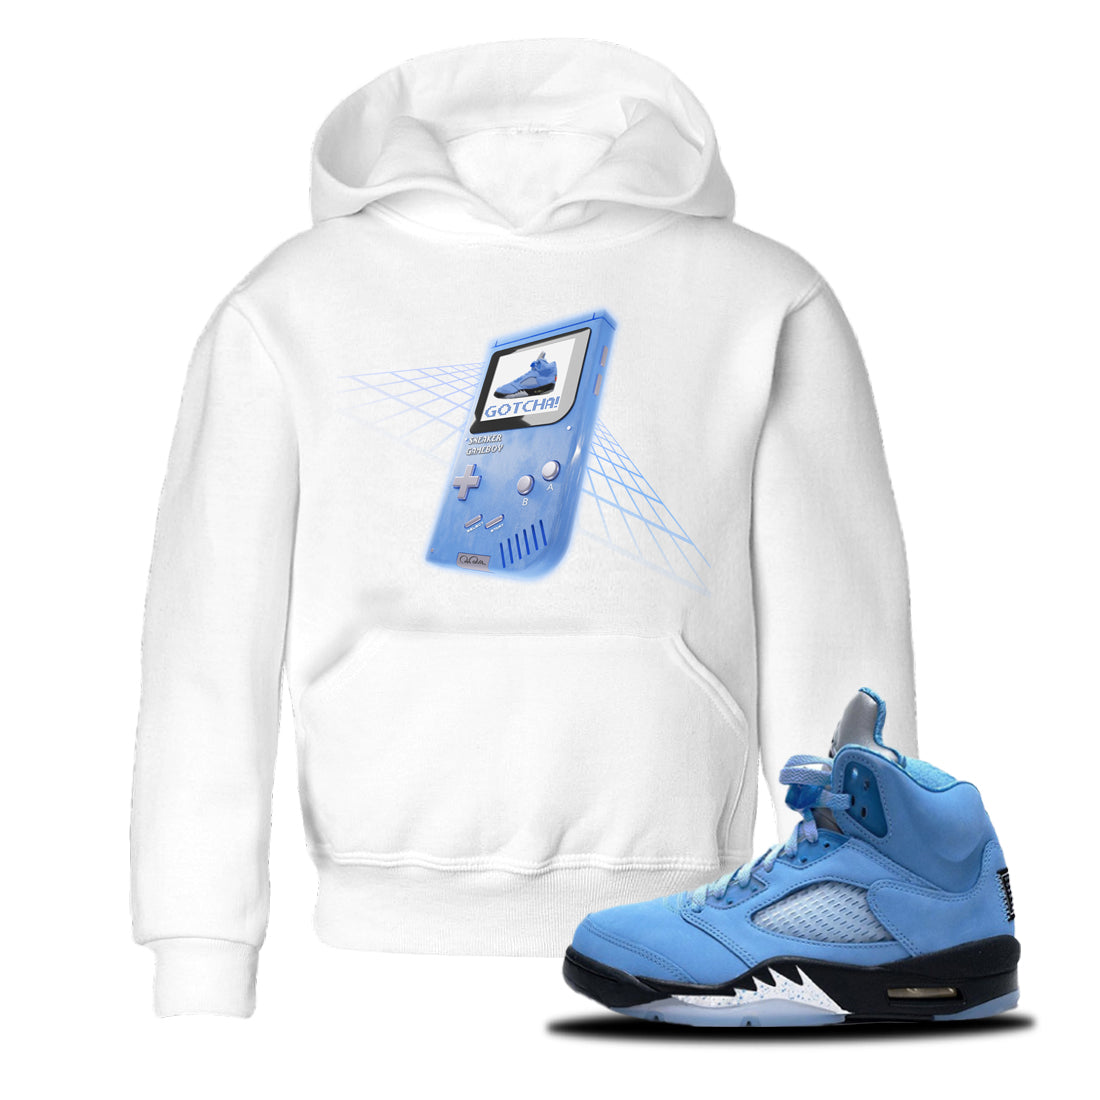 Jordan 5 UNC Jordan Shirts Sneaker Game Boy Sneaker Tees AJ5 UNC Sneaker Release Tees Kids Shirts White 1